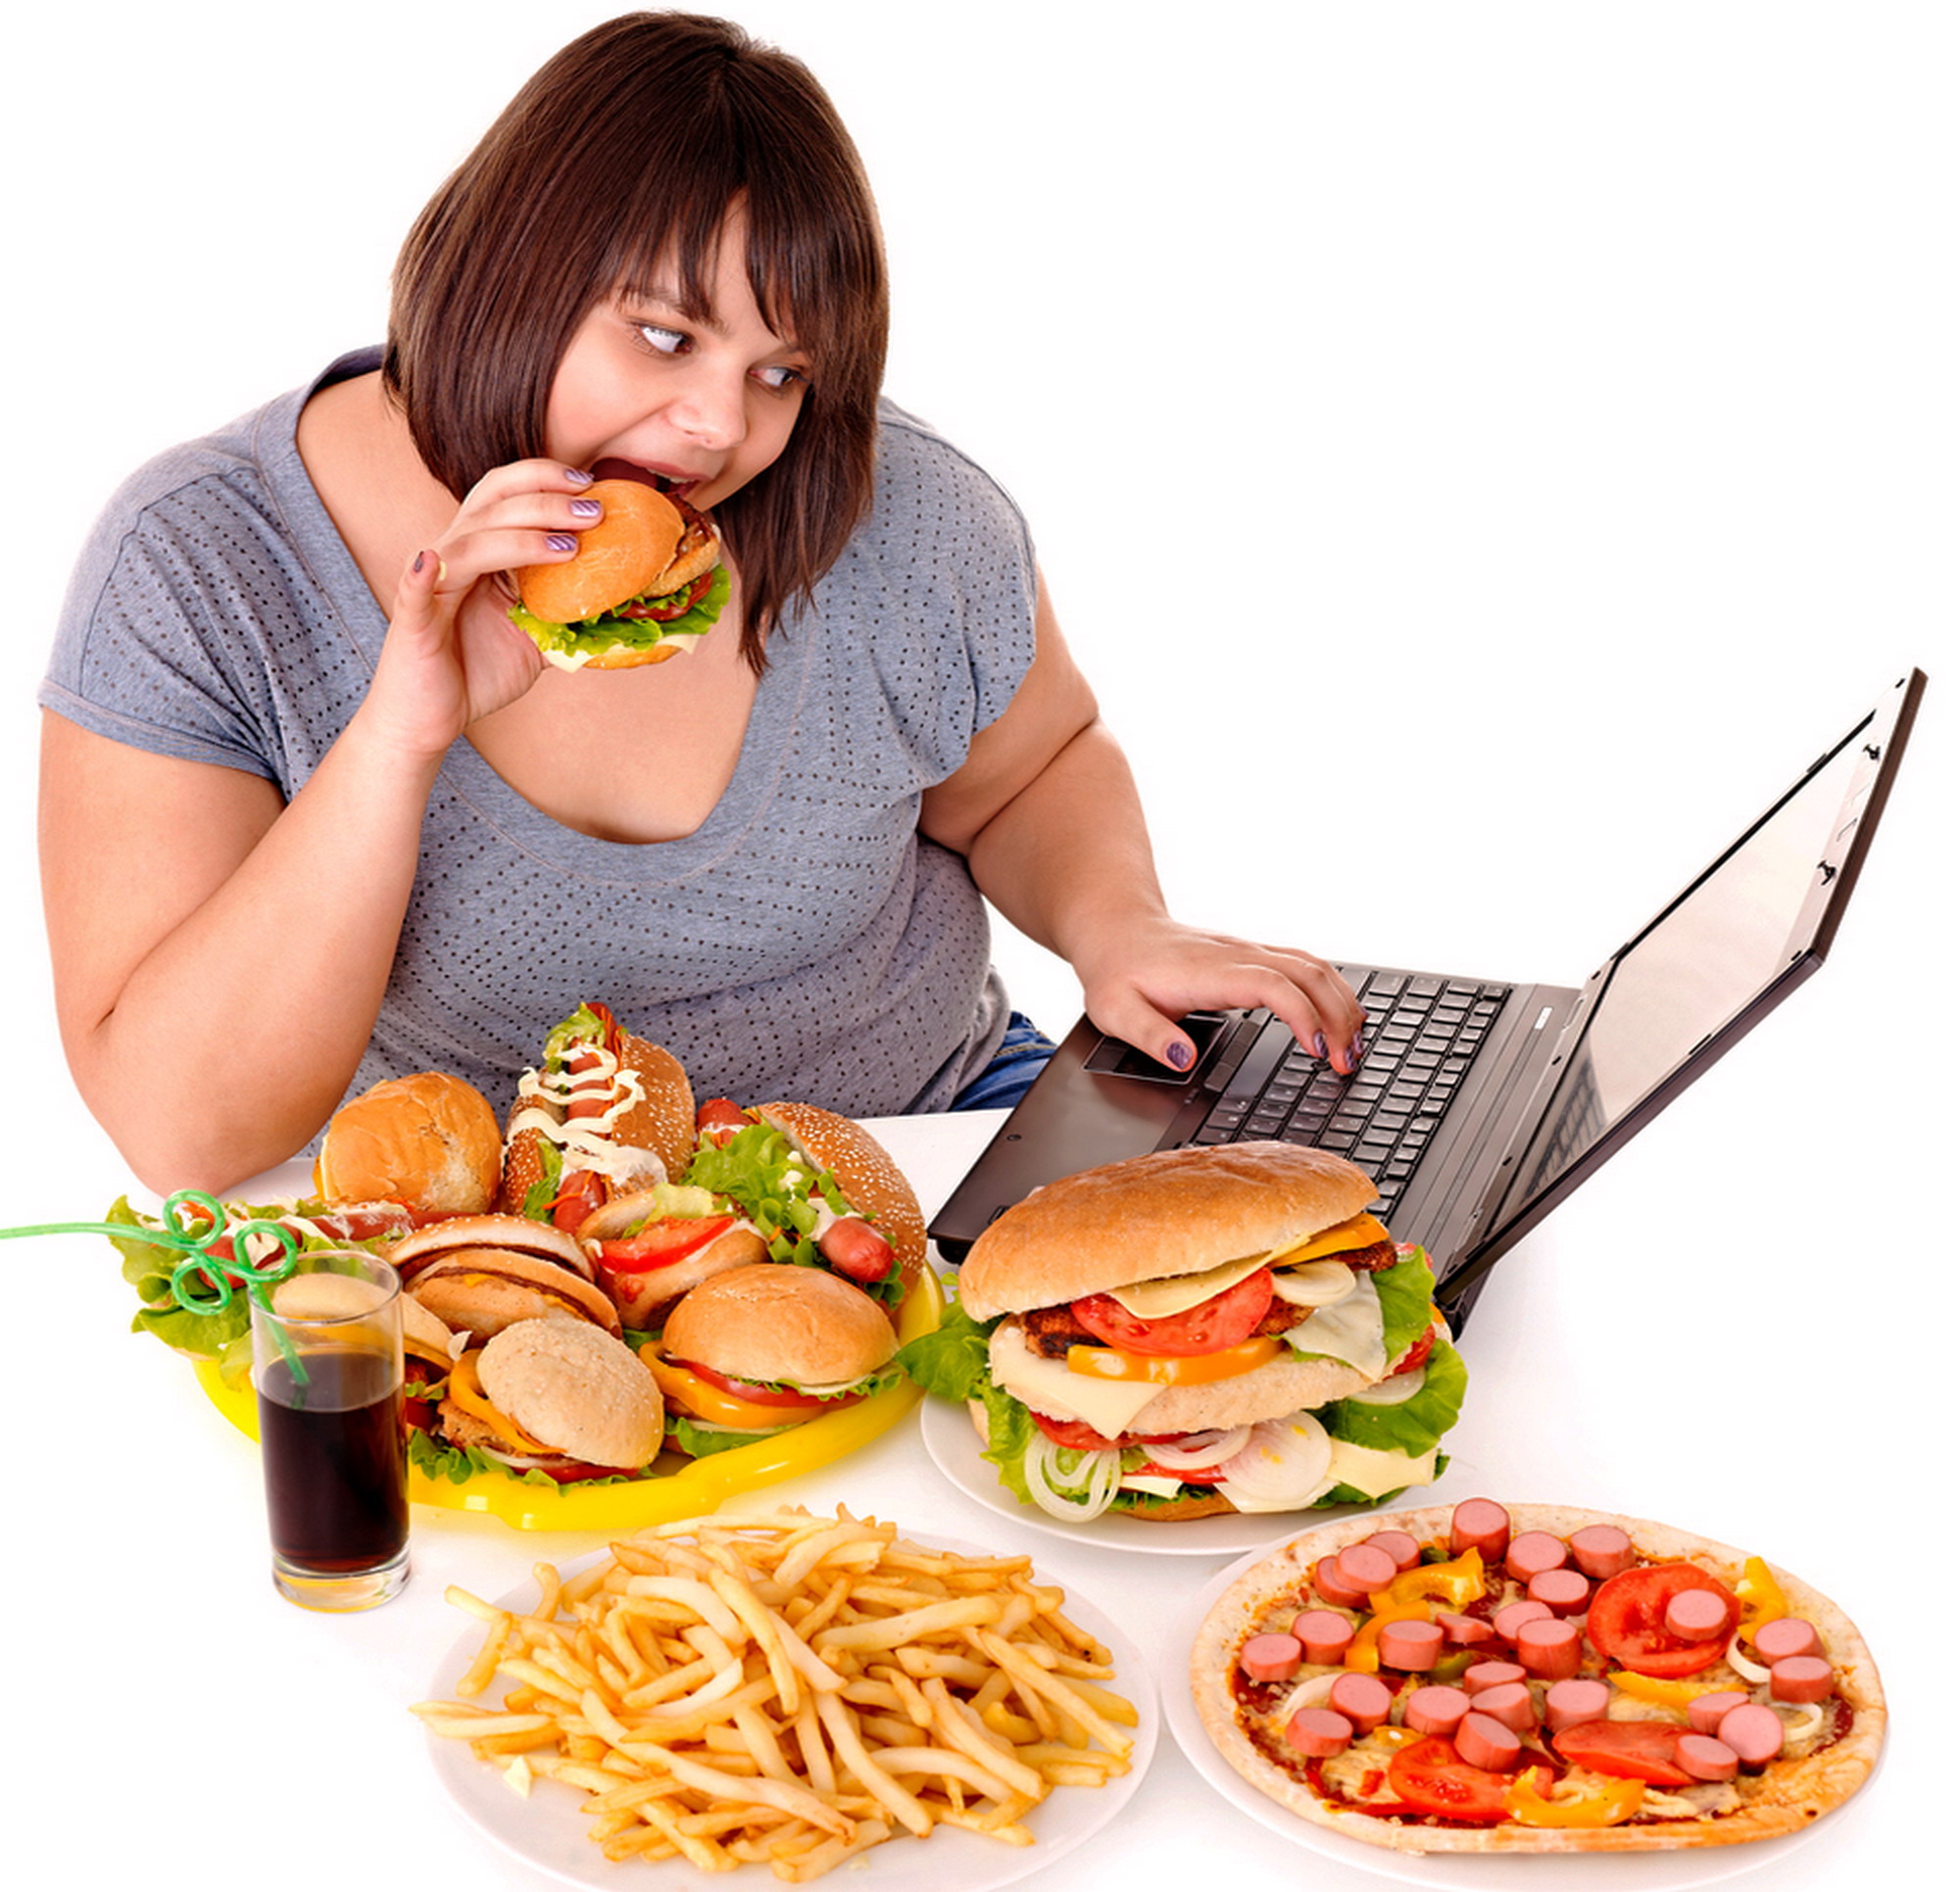 Unhealthy eating habits